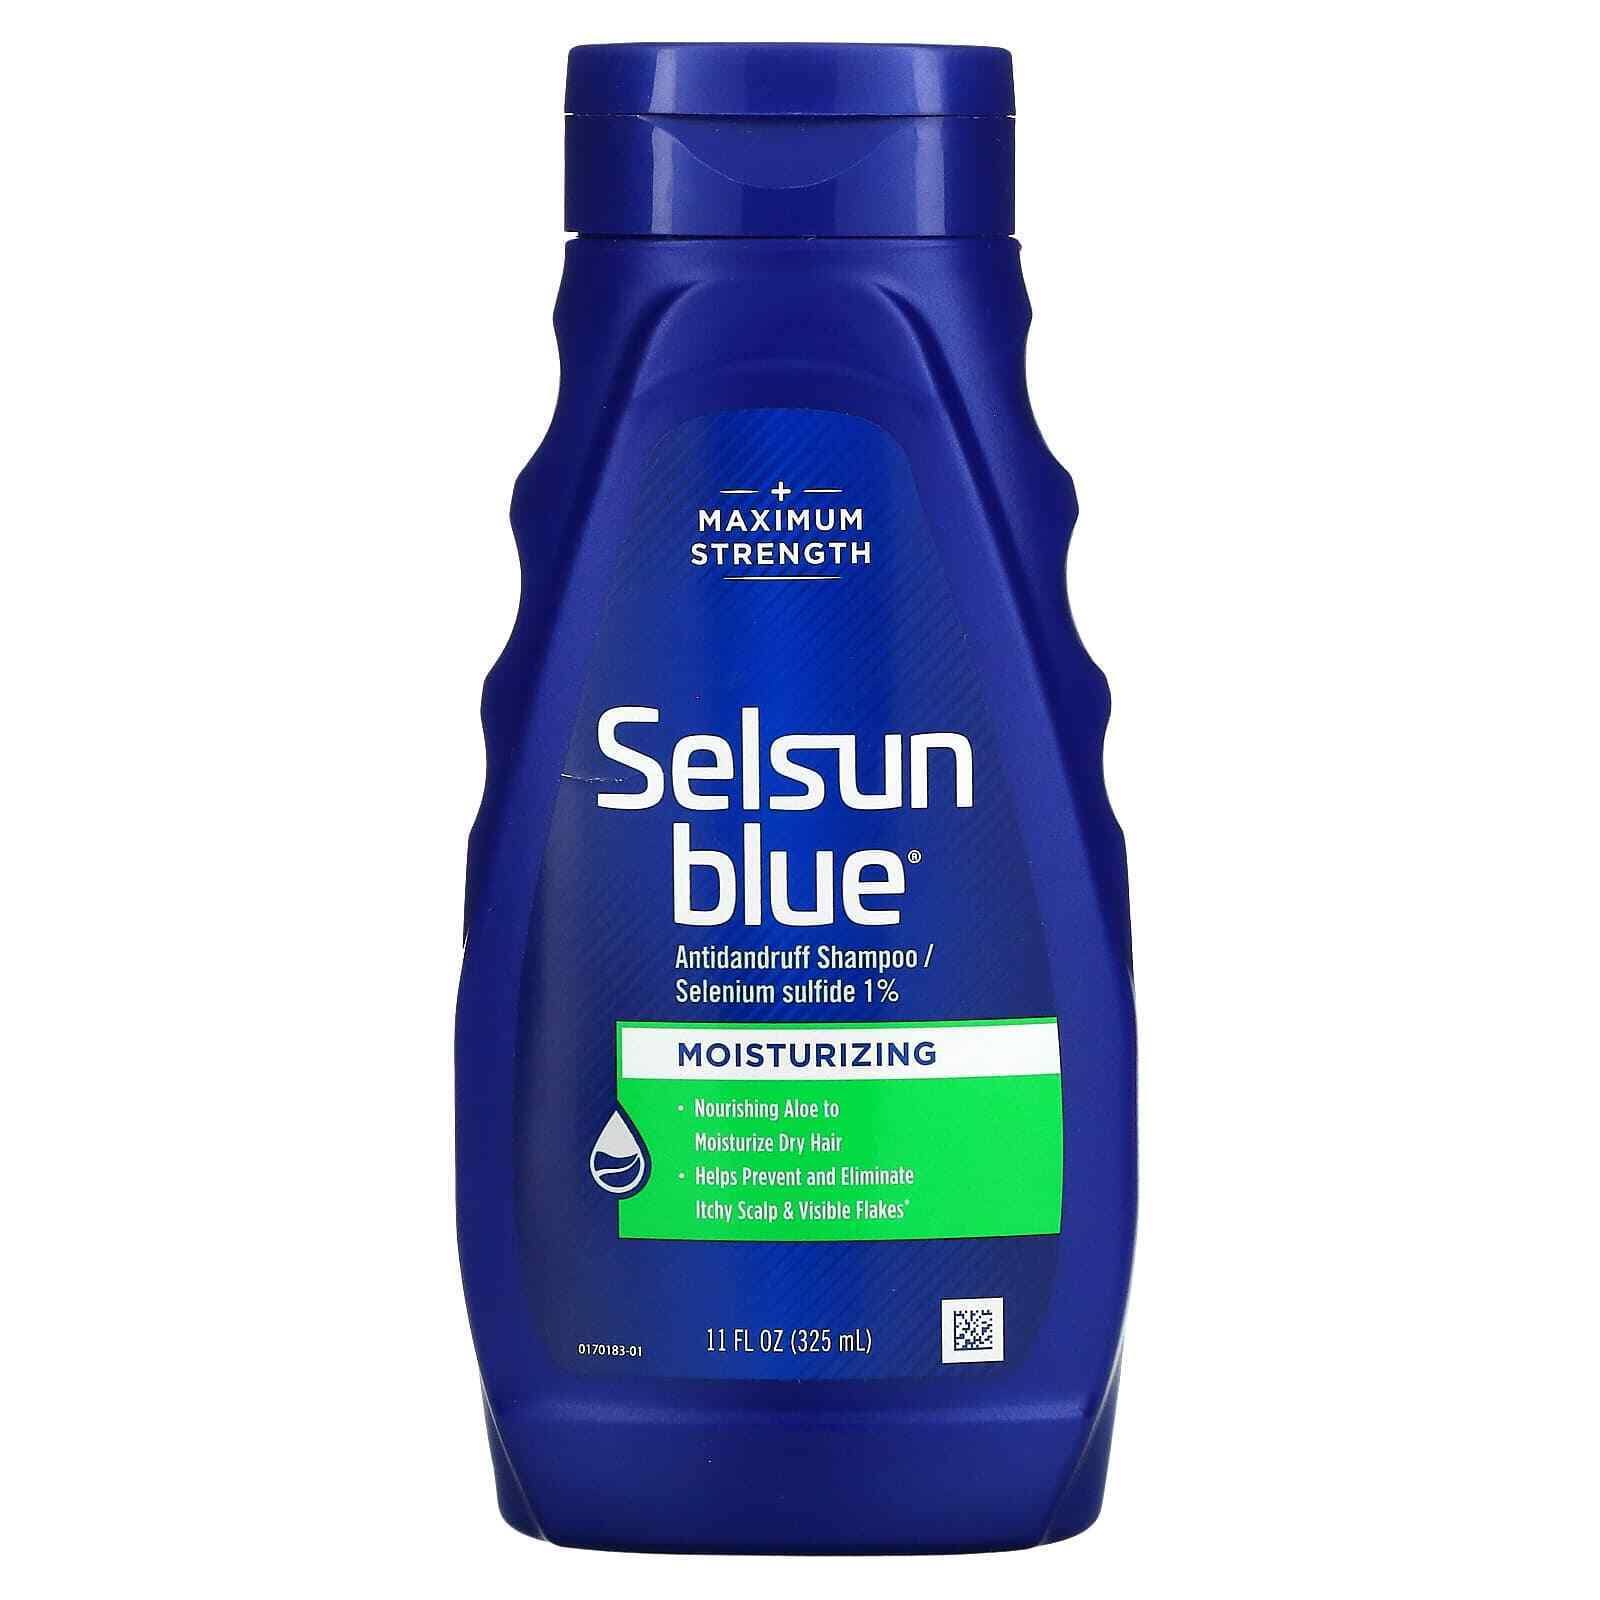 Selsun Blue Moisturizing Dandruff Shampoo - Dry Hair, 325ml